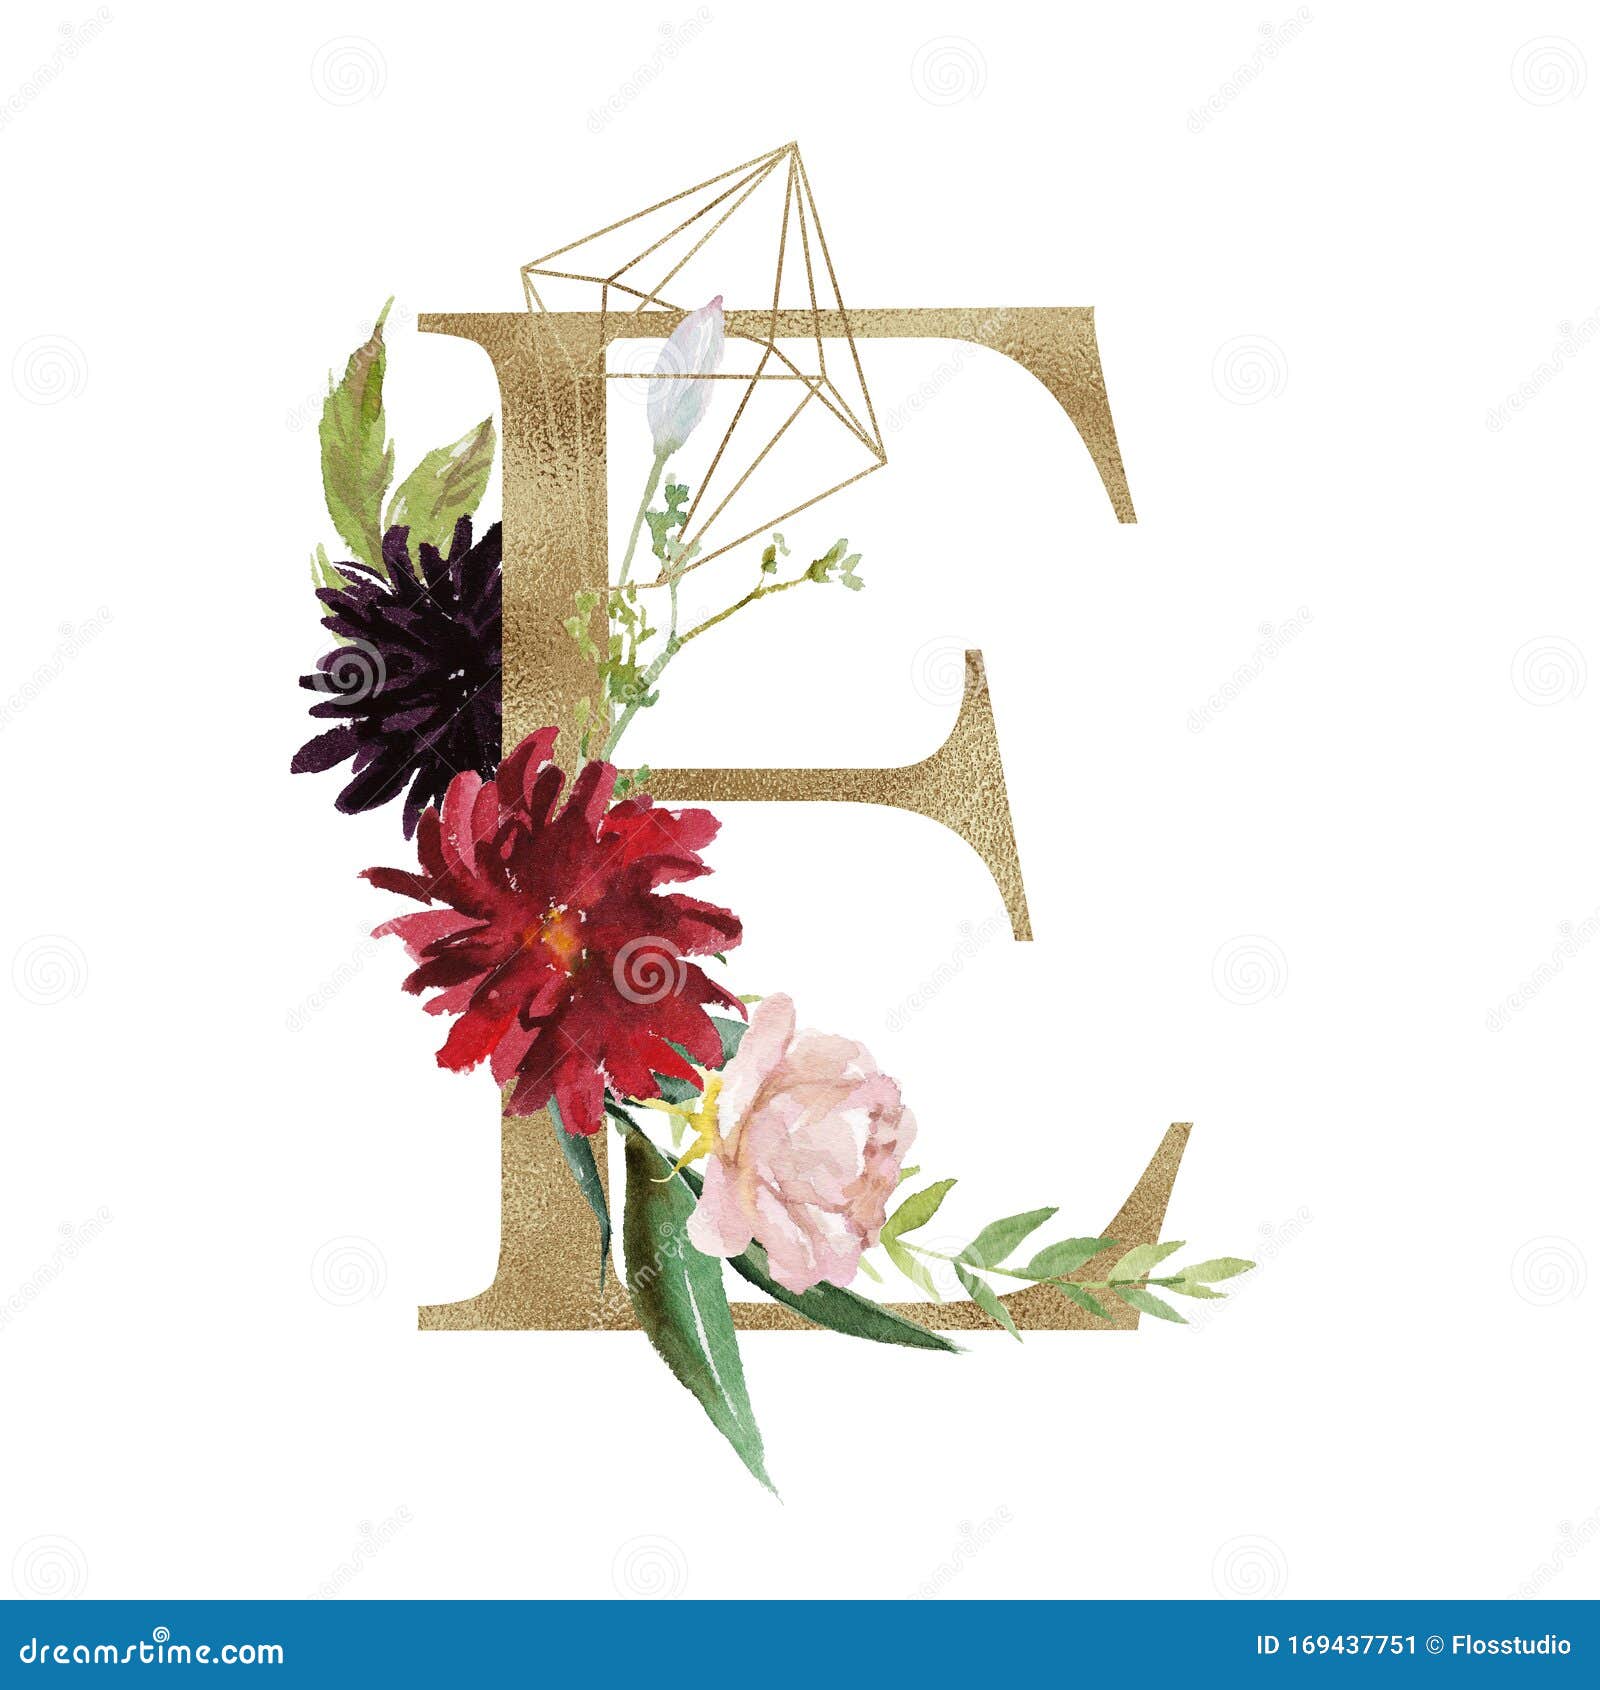 Floral Alphabet - Letter E With Flowers Bouquet Composition And